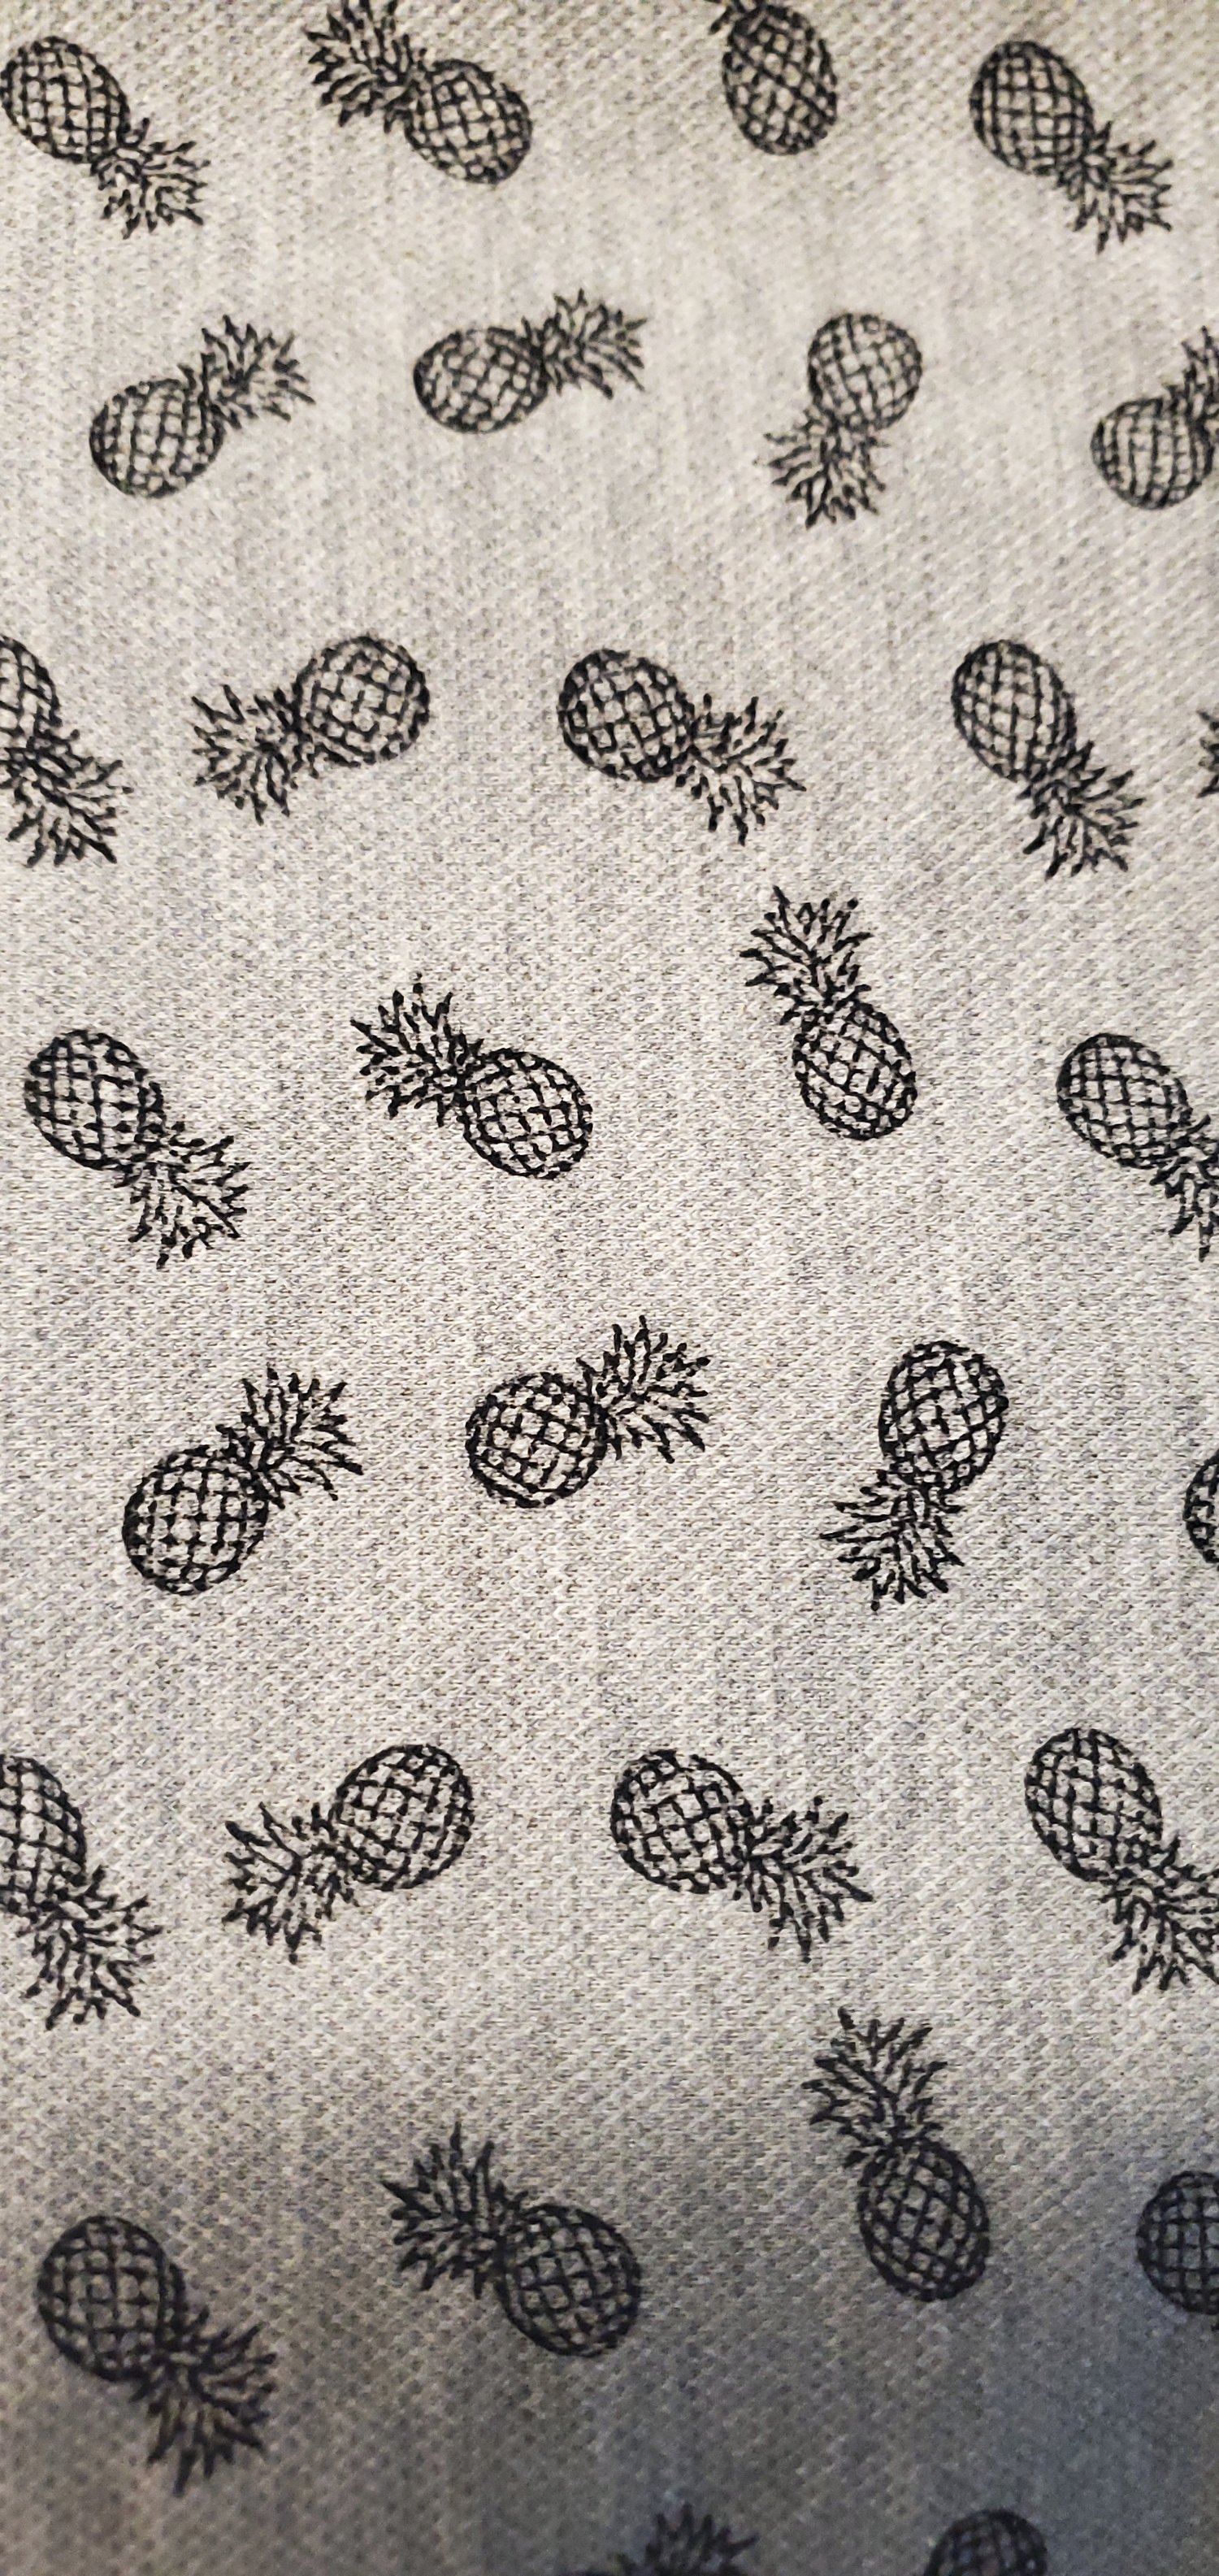 Image of Pineapple knot turban